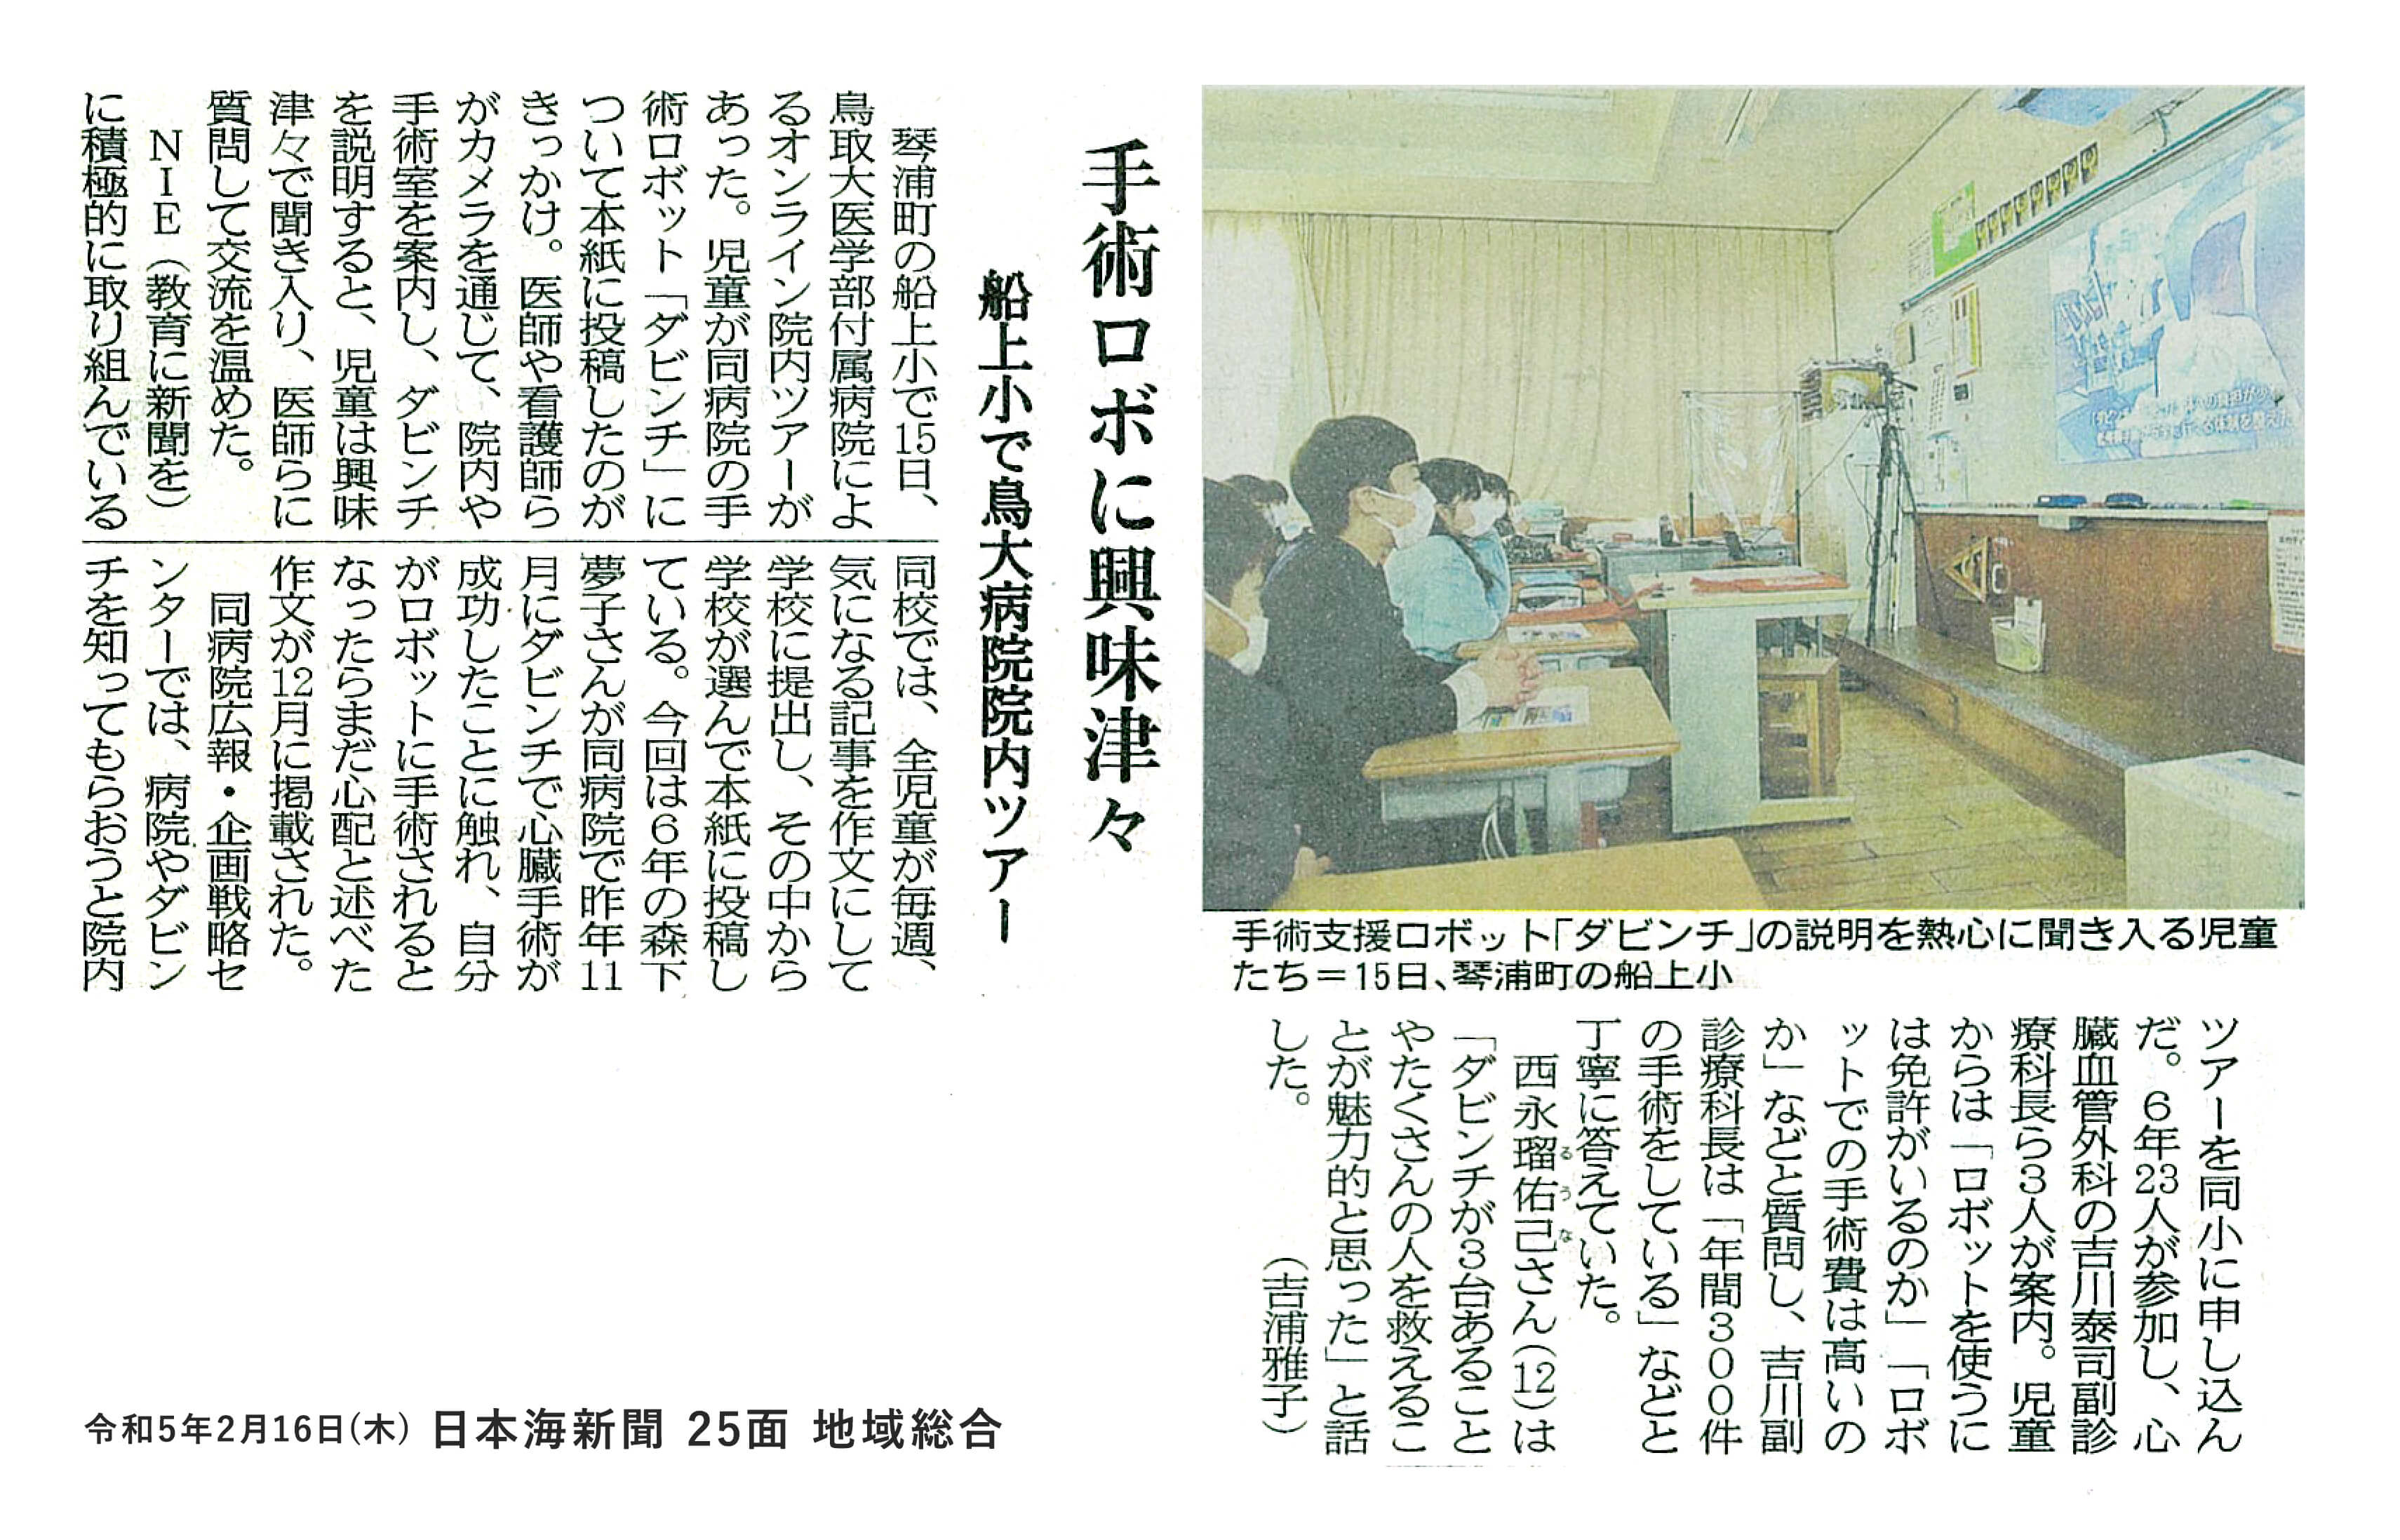 日本海新聞 25面 地域総合 手術ロボに興味津津 船上小で鳥大病院院内ツアー